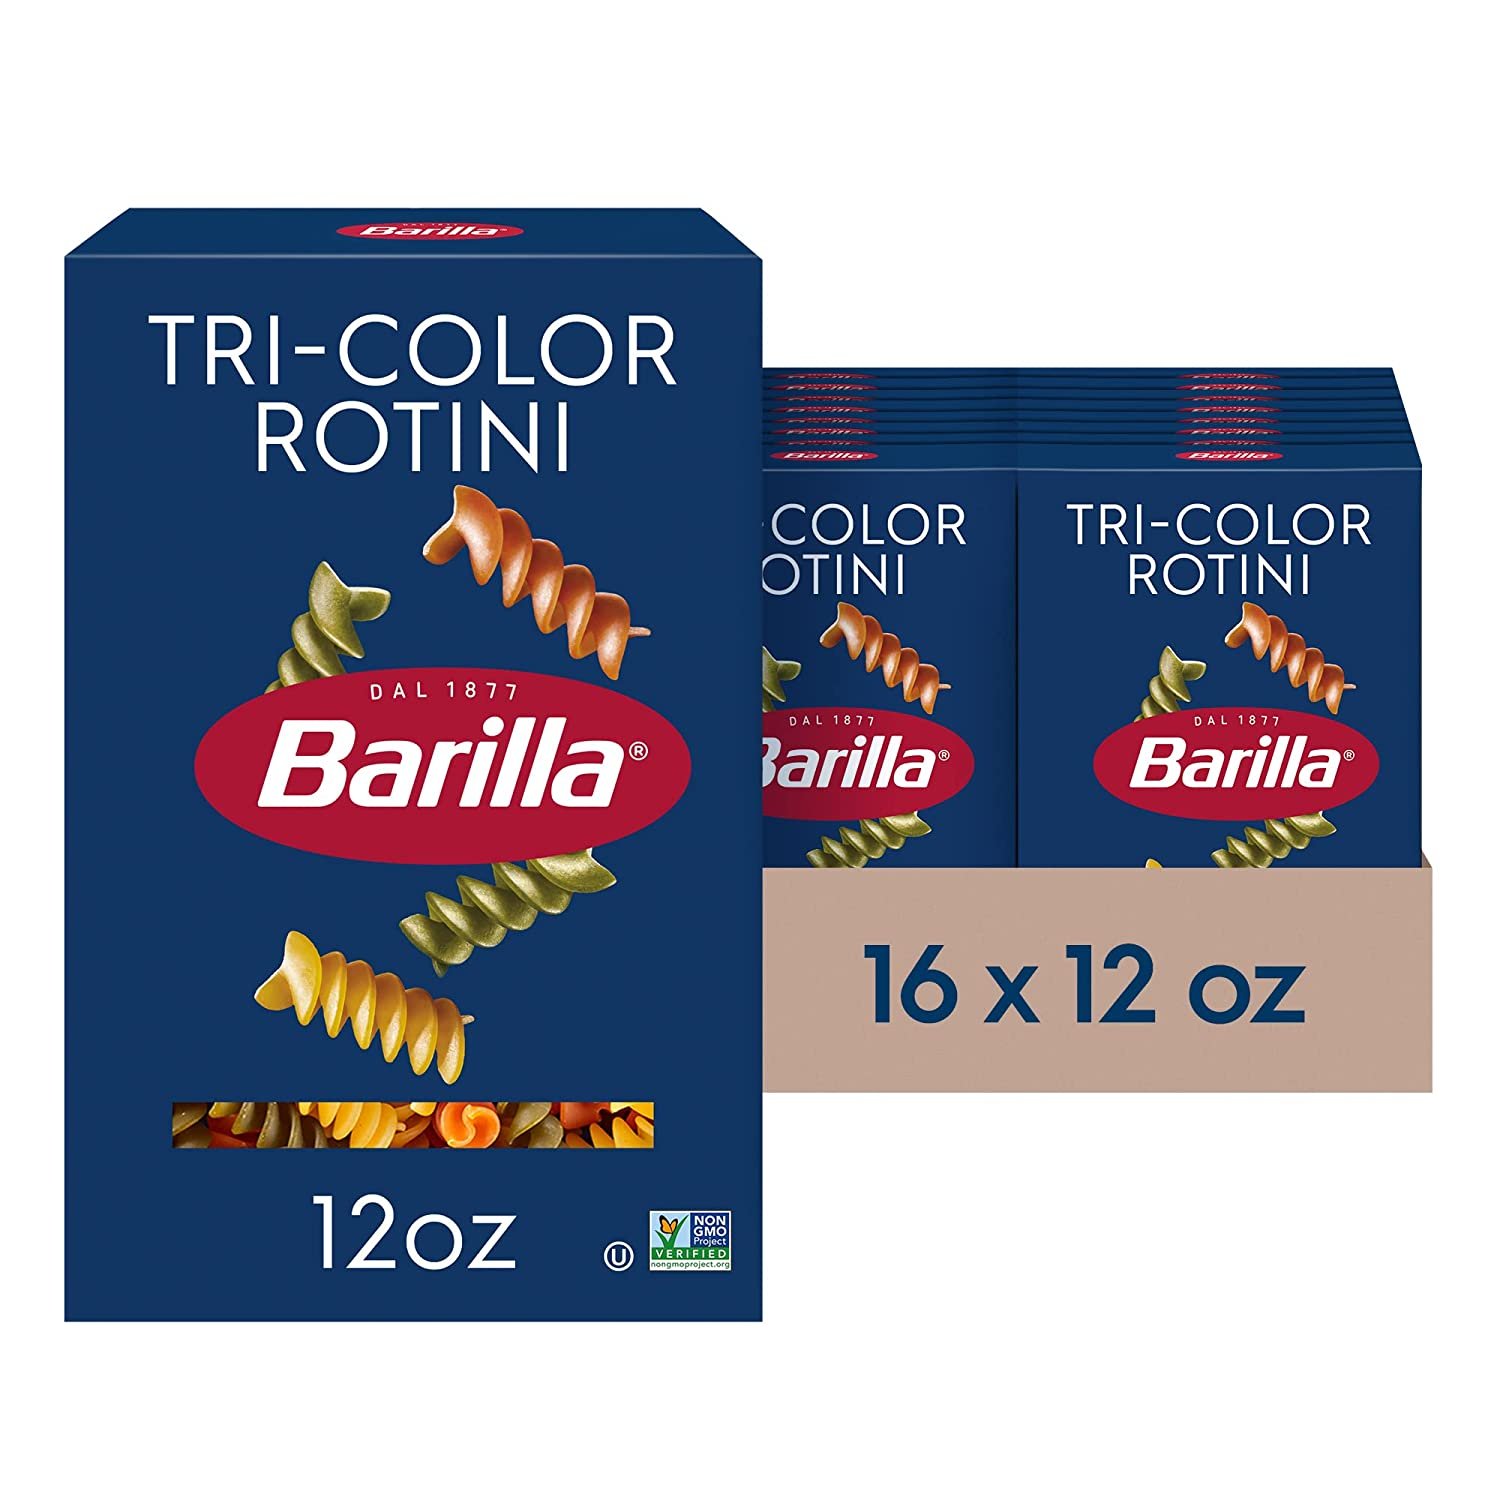 Barilla Tri-Color Rotini Pasta, 12 oz. Box (Pack of 16) -  Pasta Made with Durum Wheat Semolina -